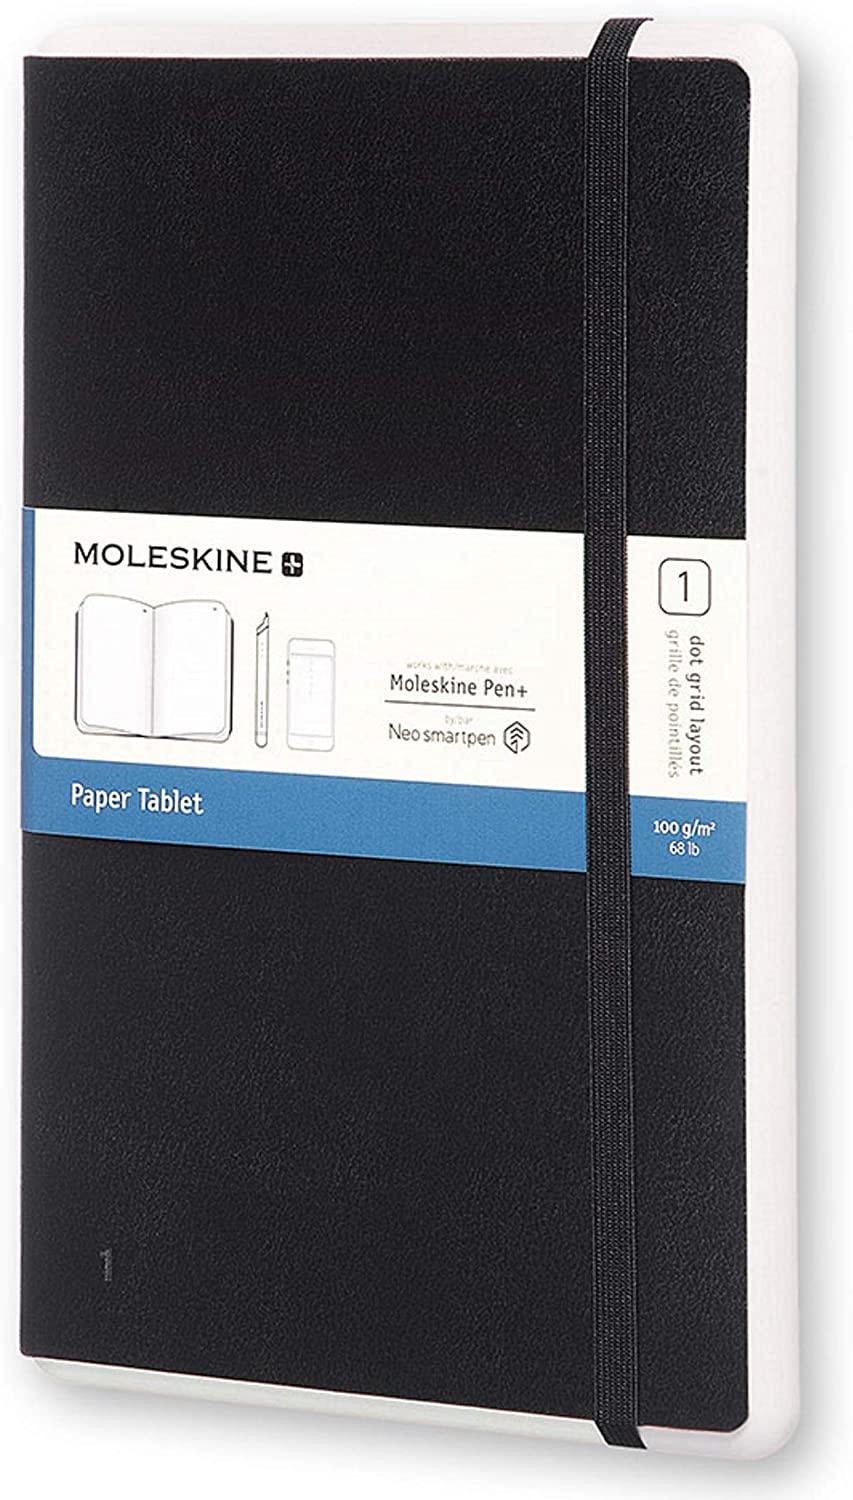 Moleskine Notebook Paper Tablet Puntinato Adatto Uso con Pen